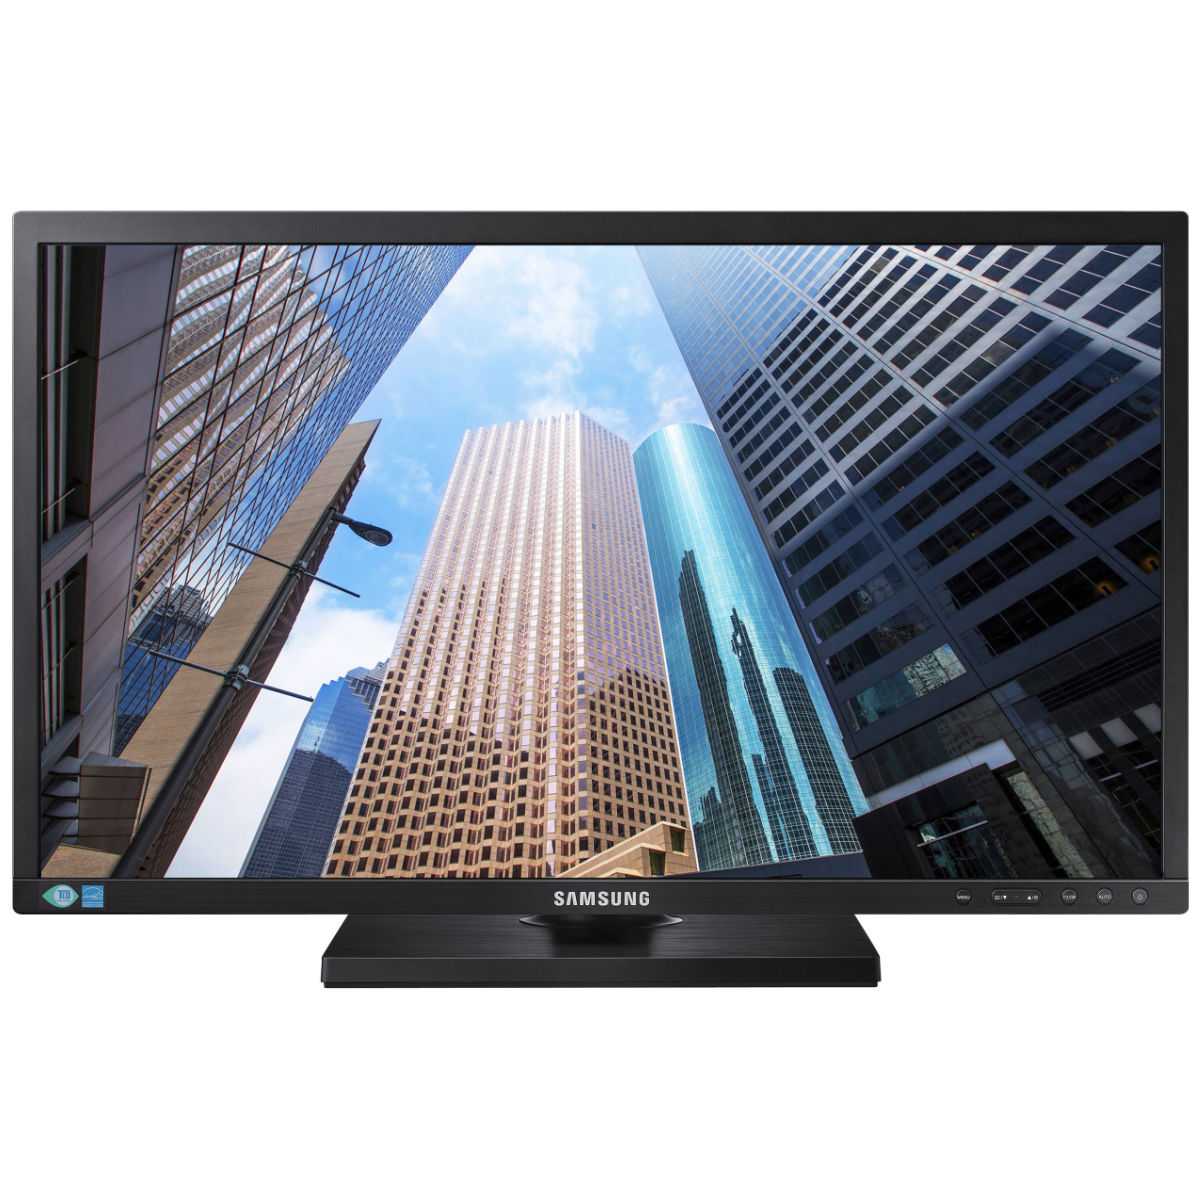 Samsung S22E450D LED HD Monitor